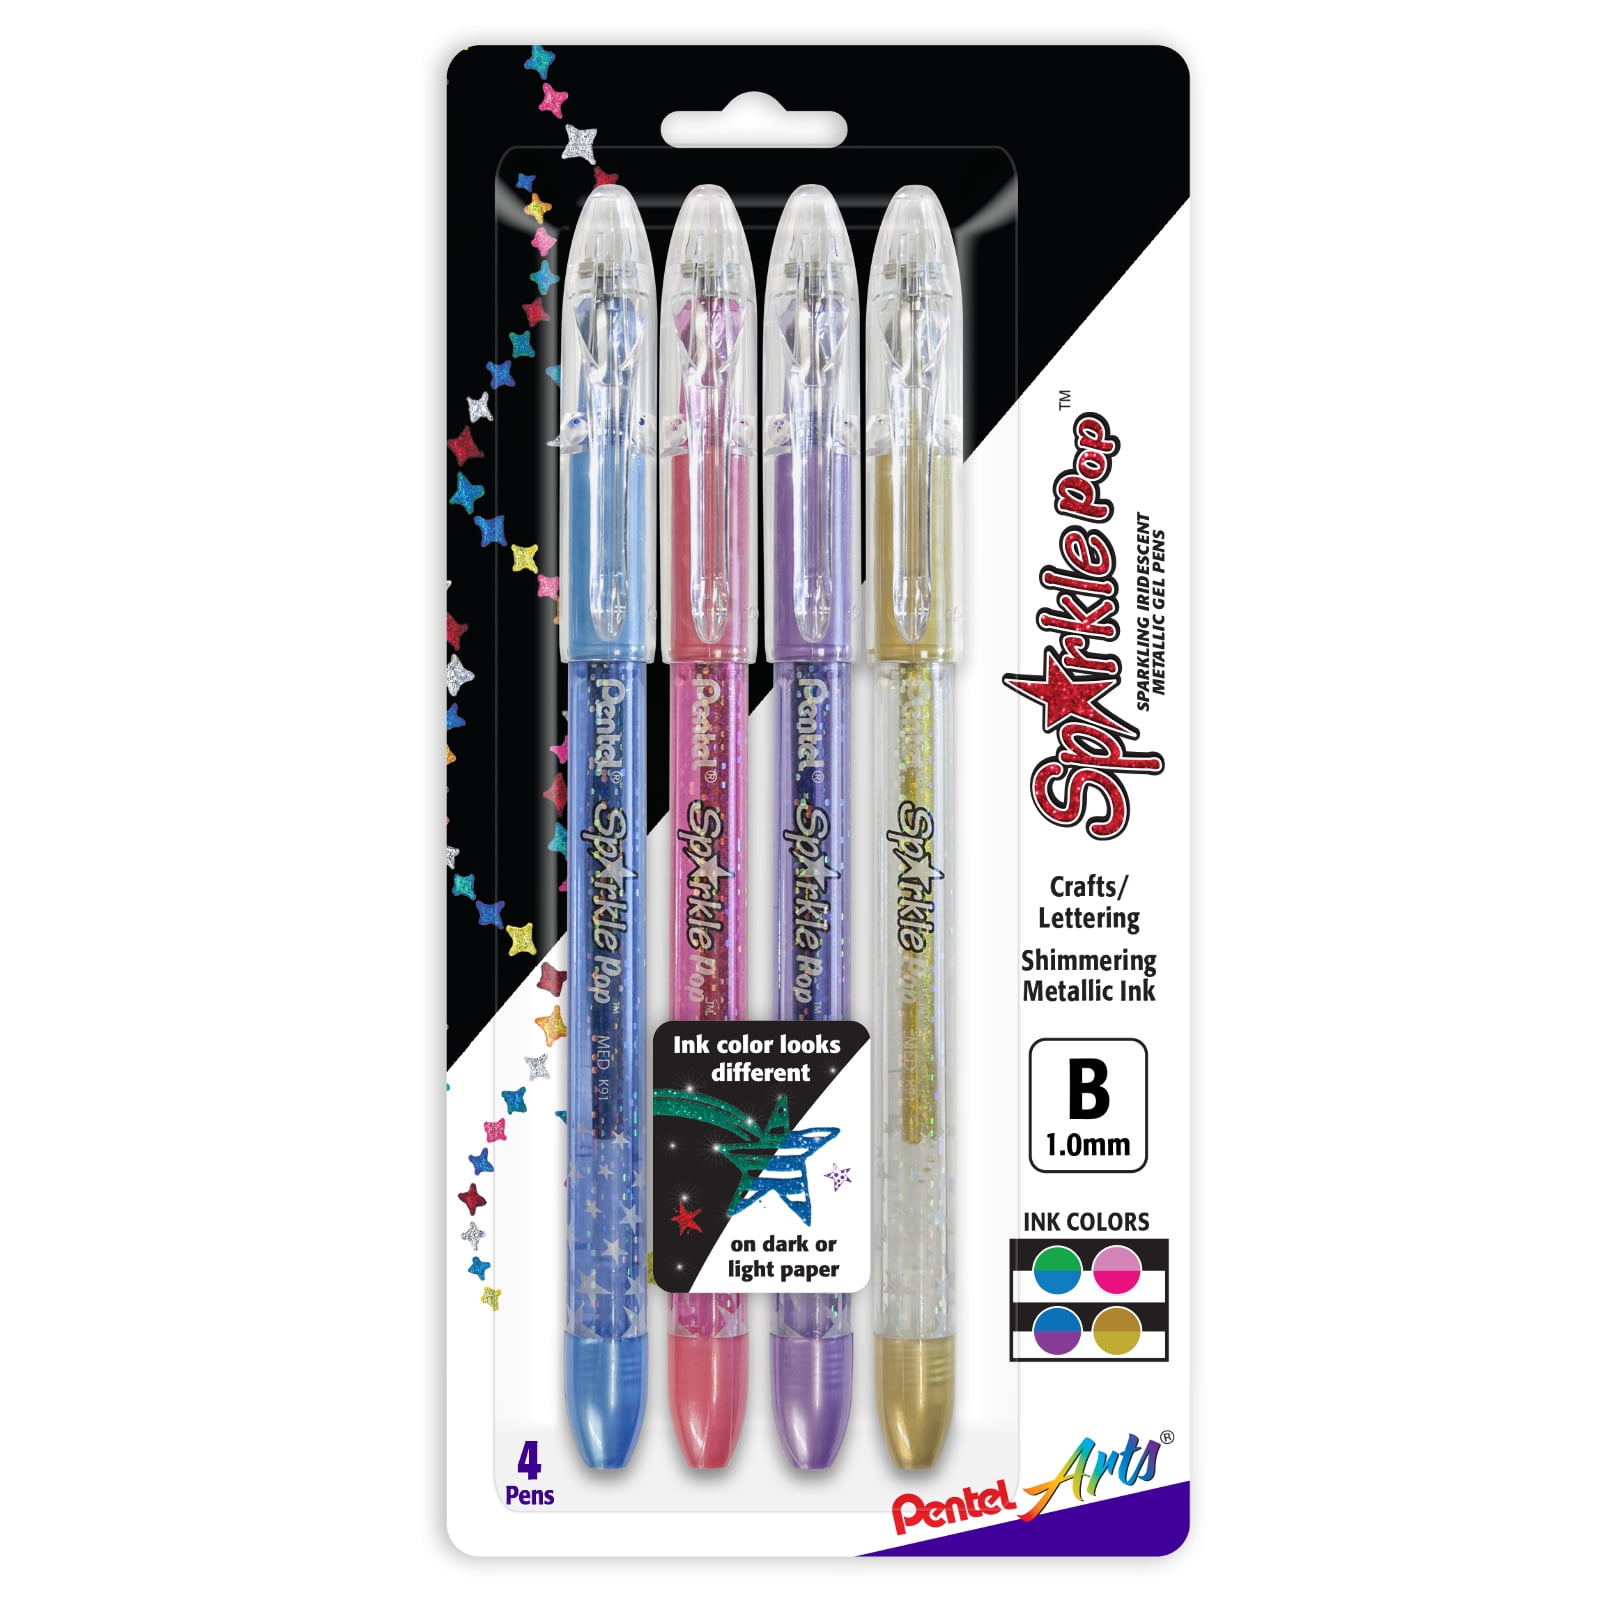 Pentel Make It Pop Pens - Milky, Solar, and Sparkle + Giveaway